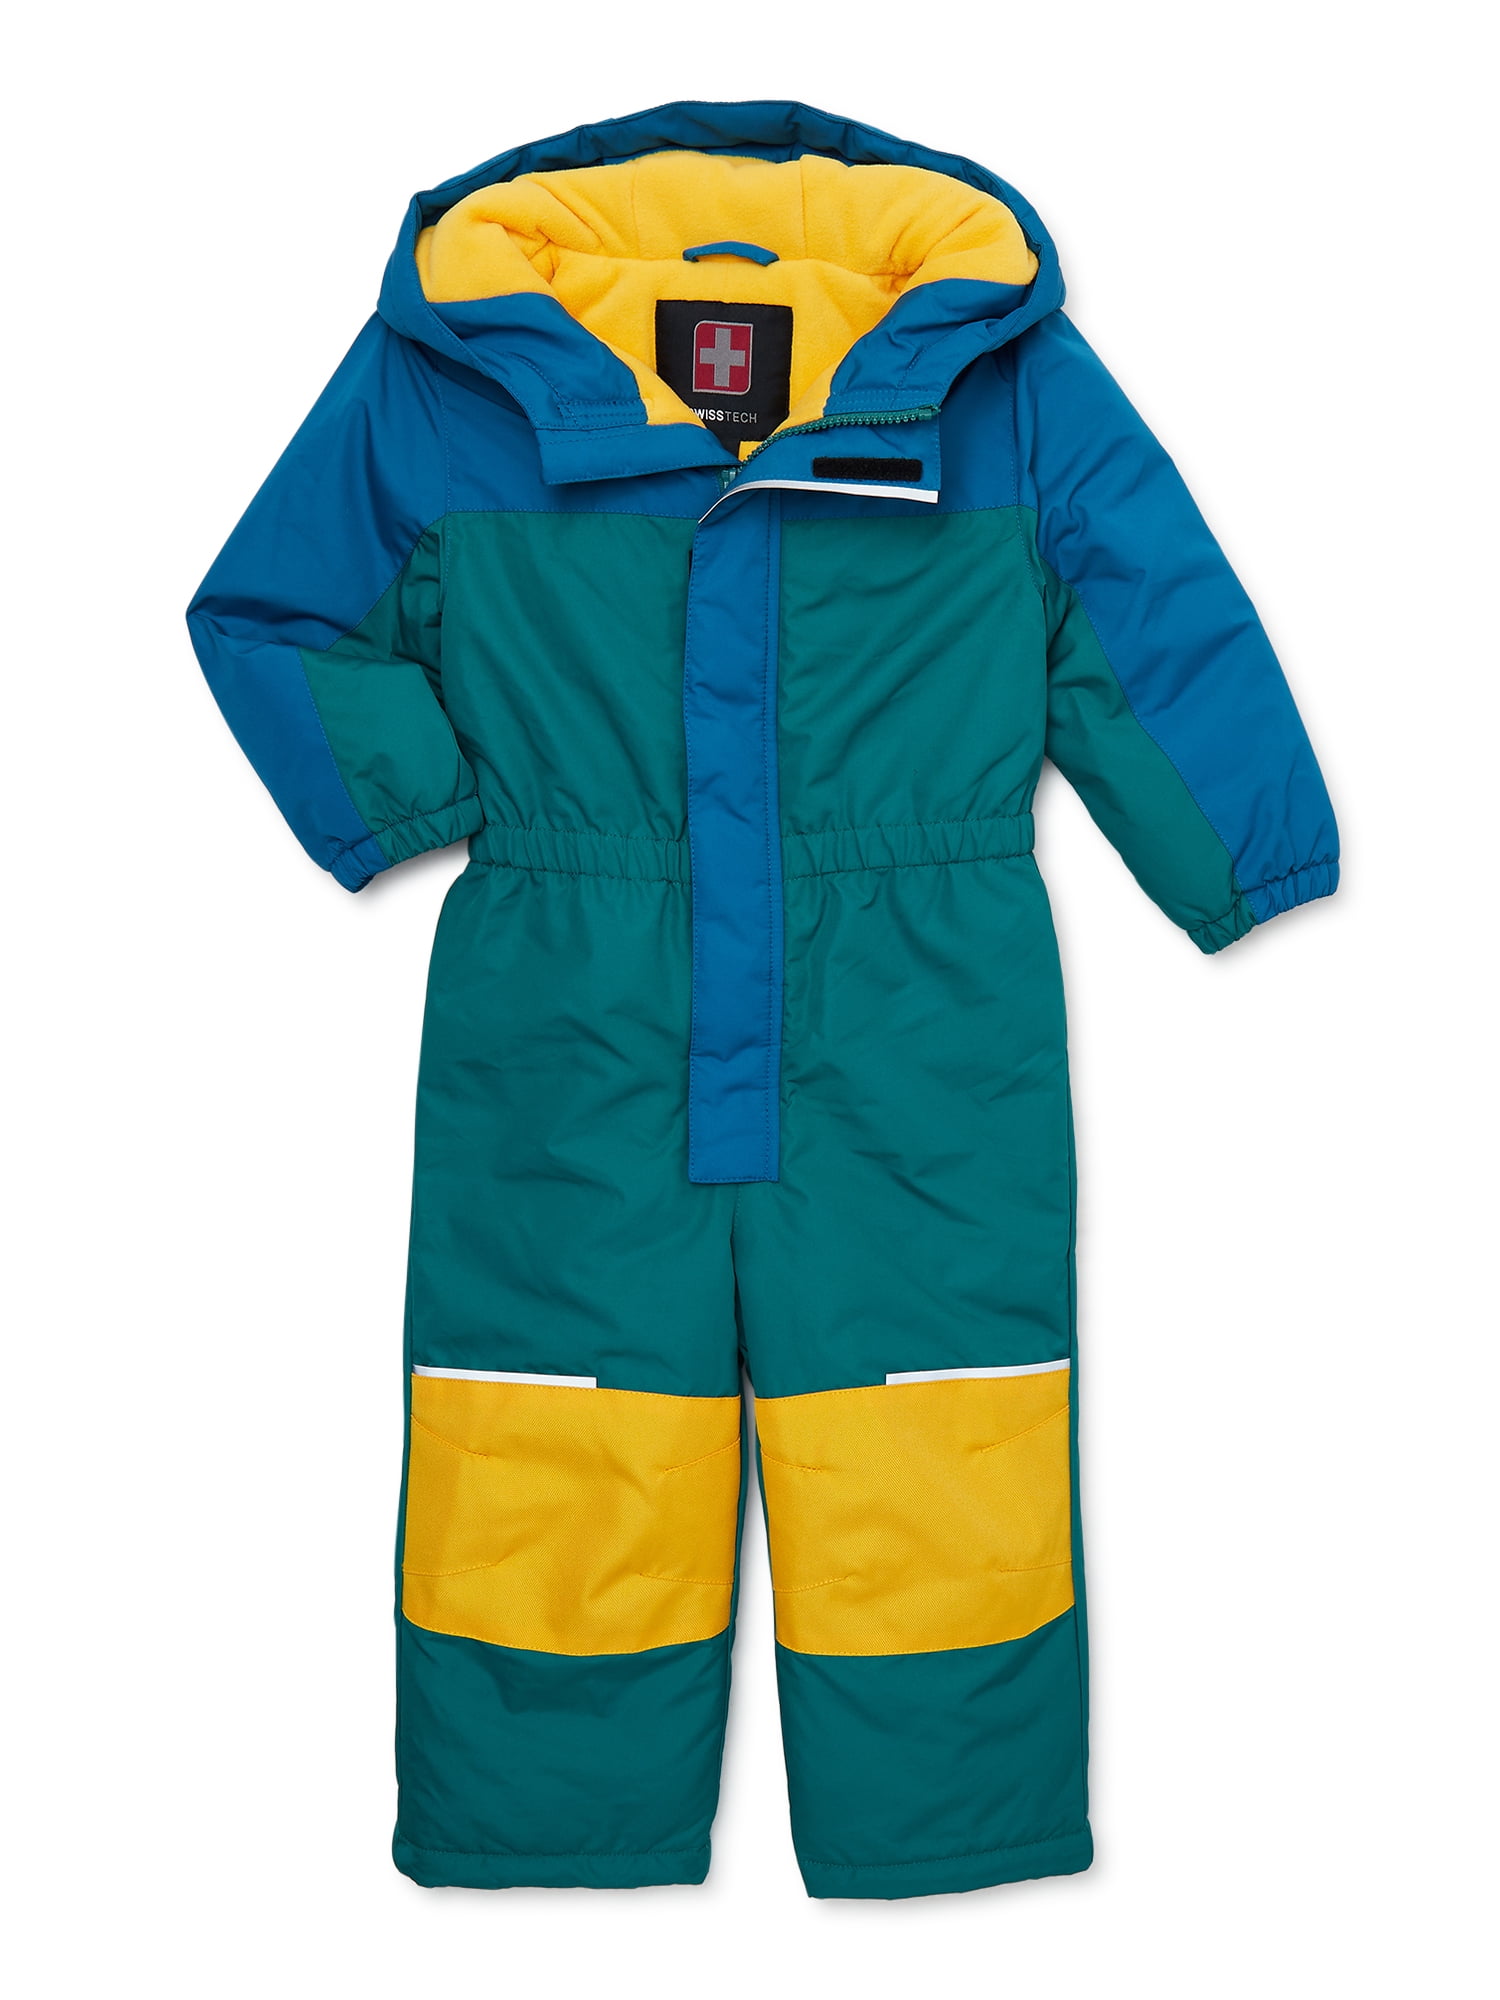 Swiss Tech Toddler Boy Snowsuit, Sizes 2T-5T - Walmart.com